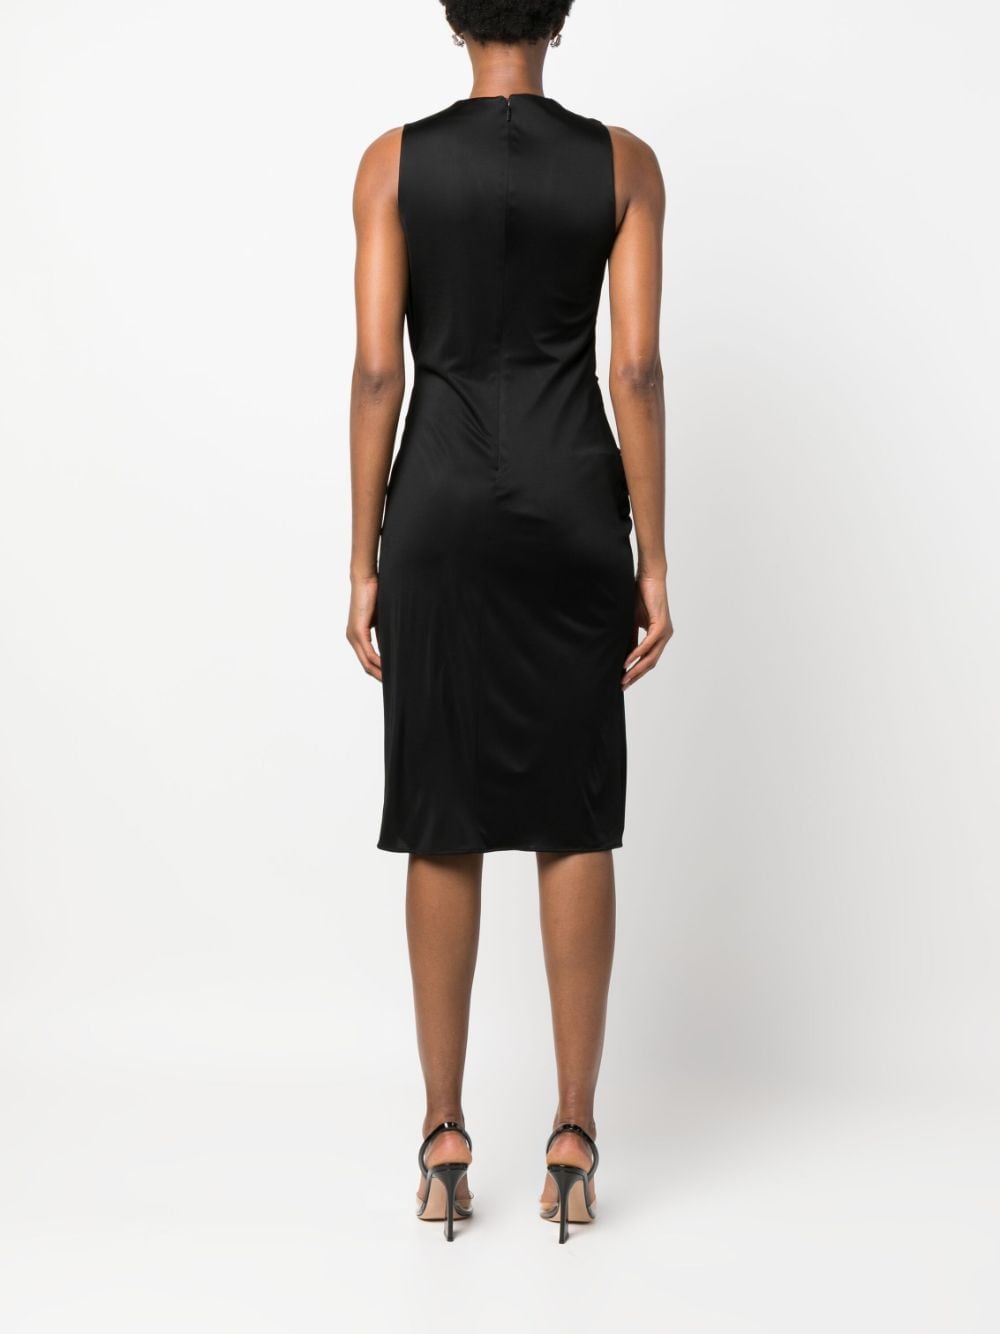 Elegant Black Draped Dress for Women by Versace